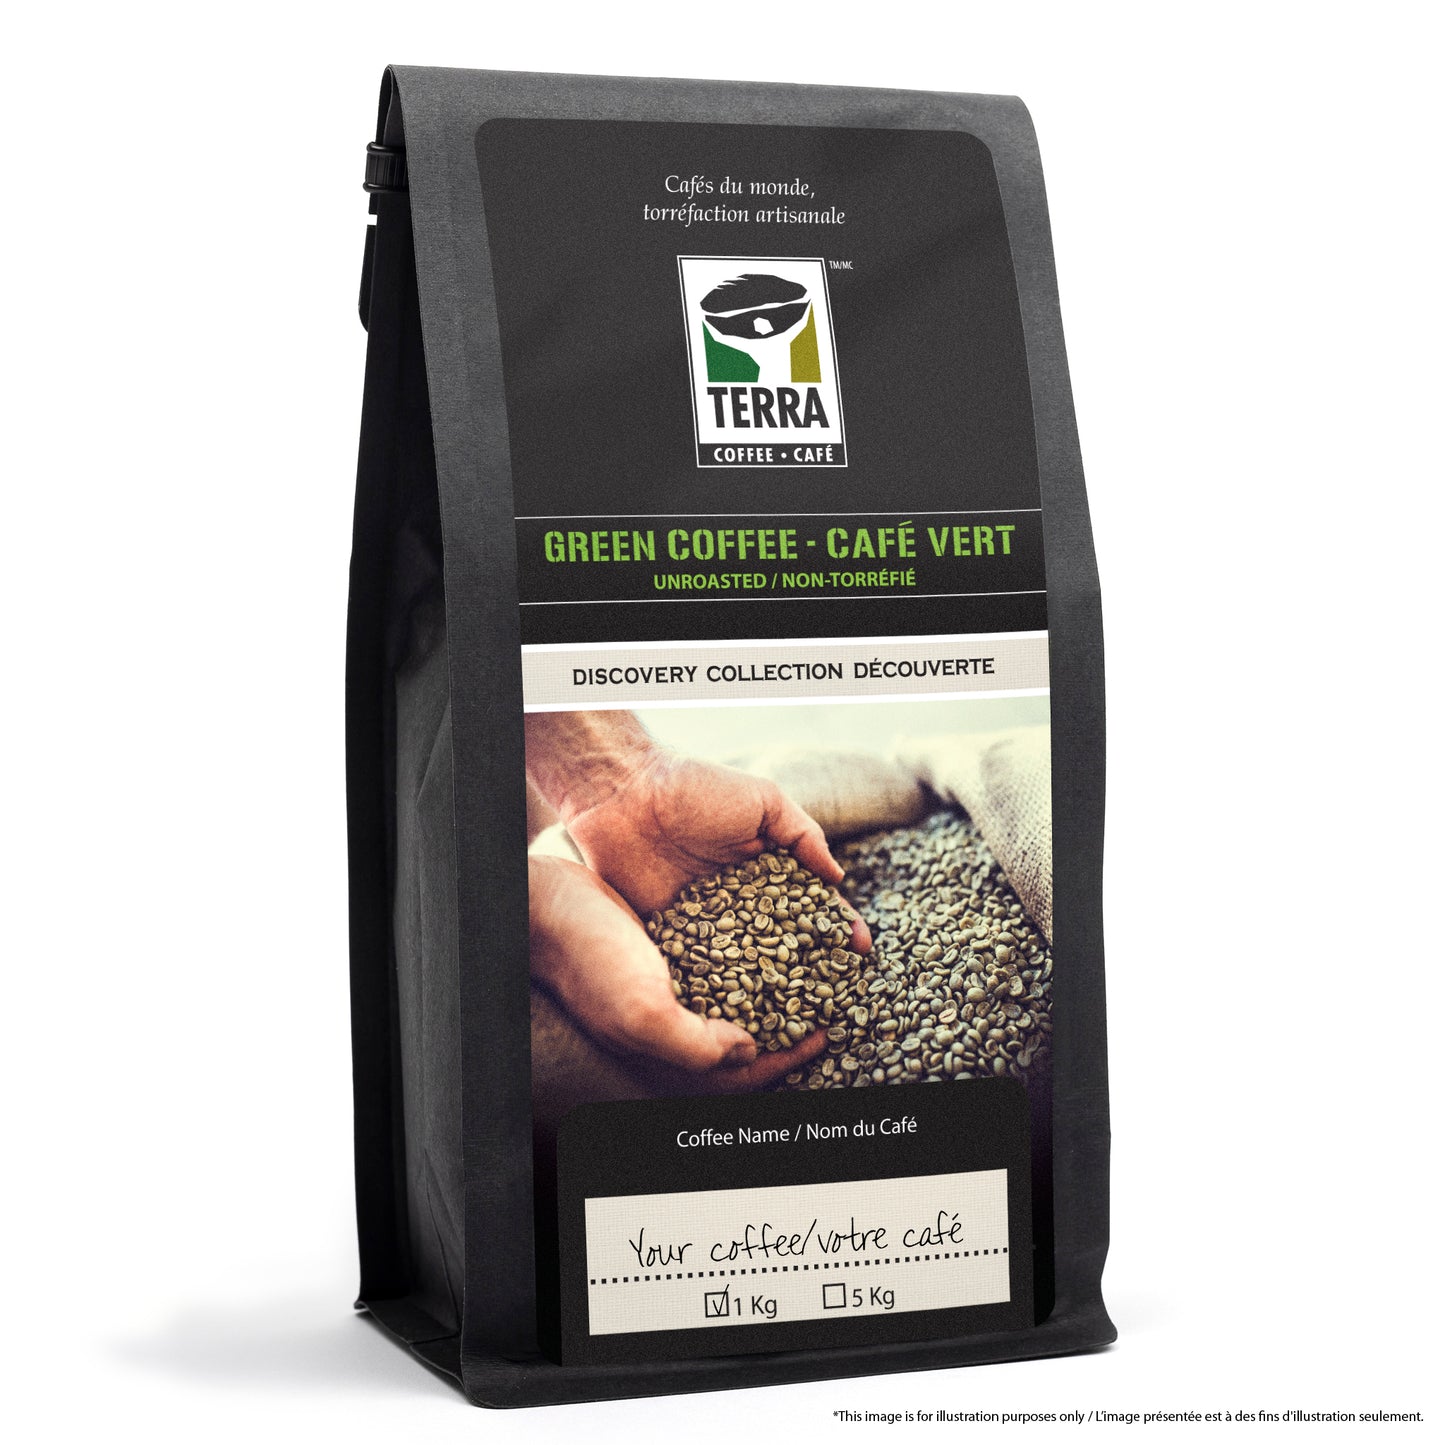 Peru Washed Amazonas Grade 1 - Certified Organic - Green Coffee